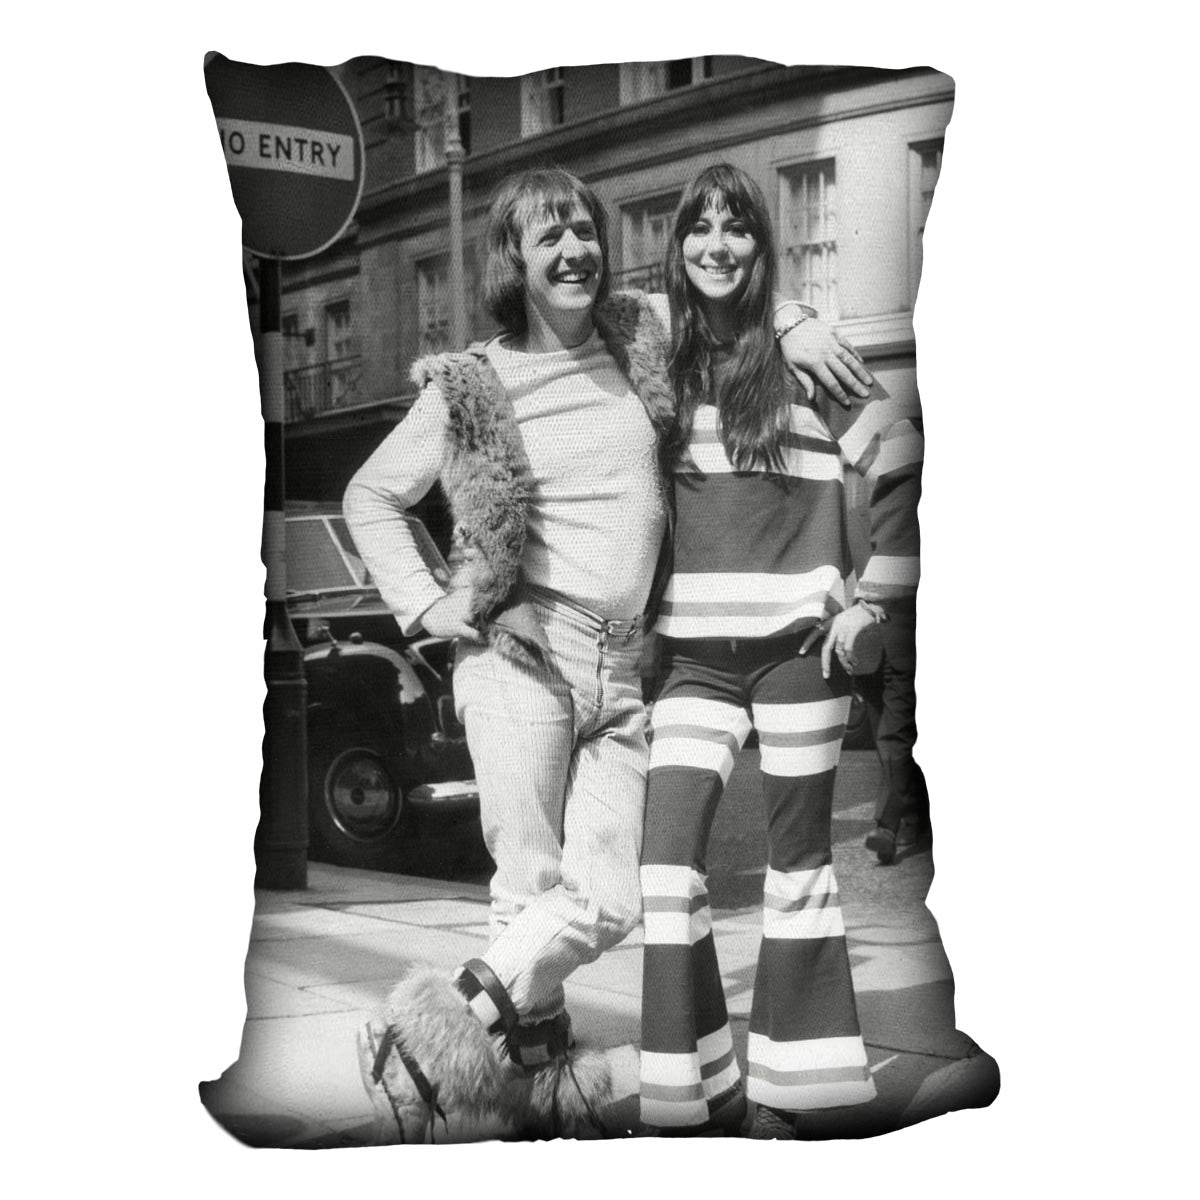 Sonny and Cher street life Cushion